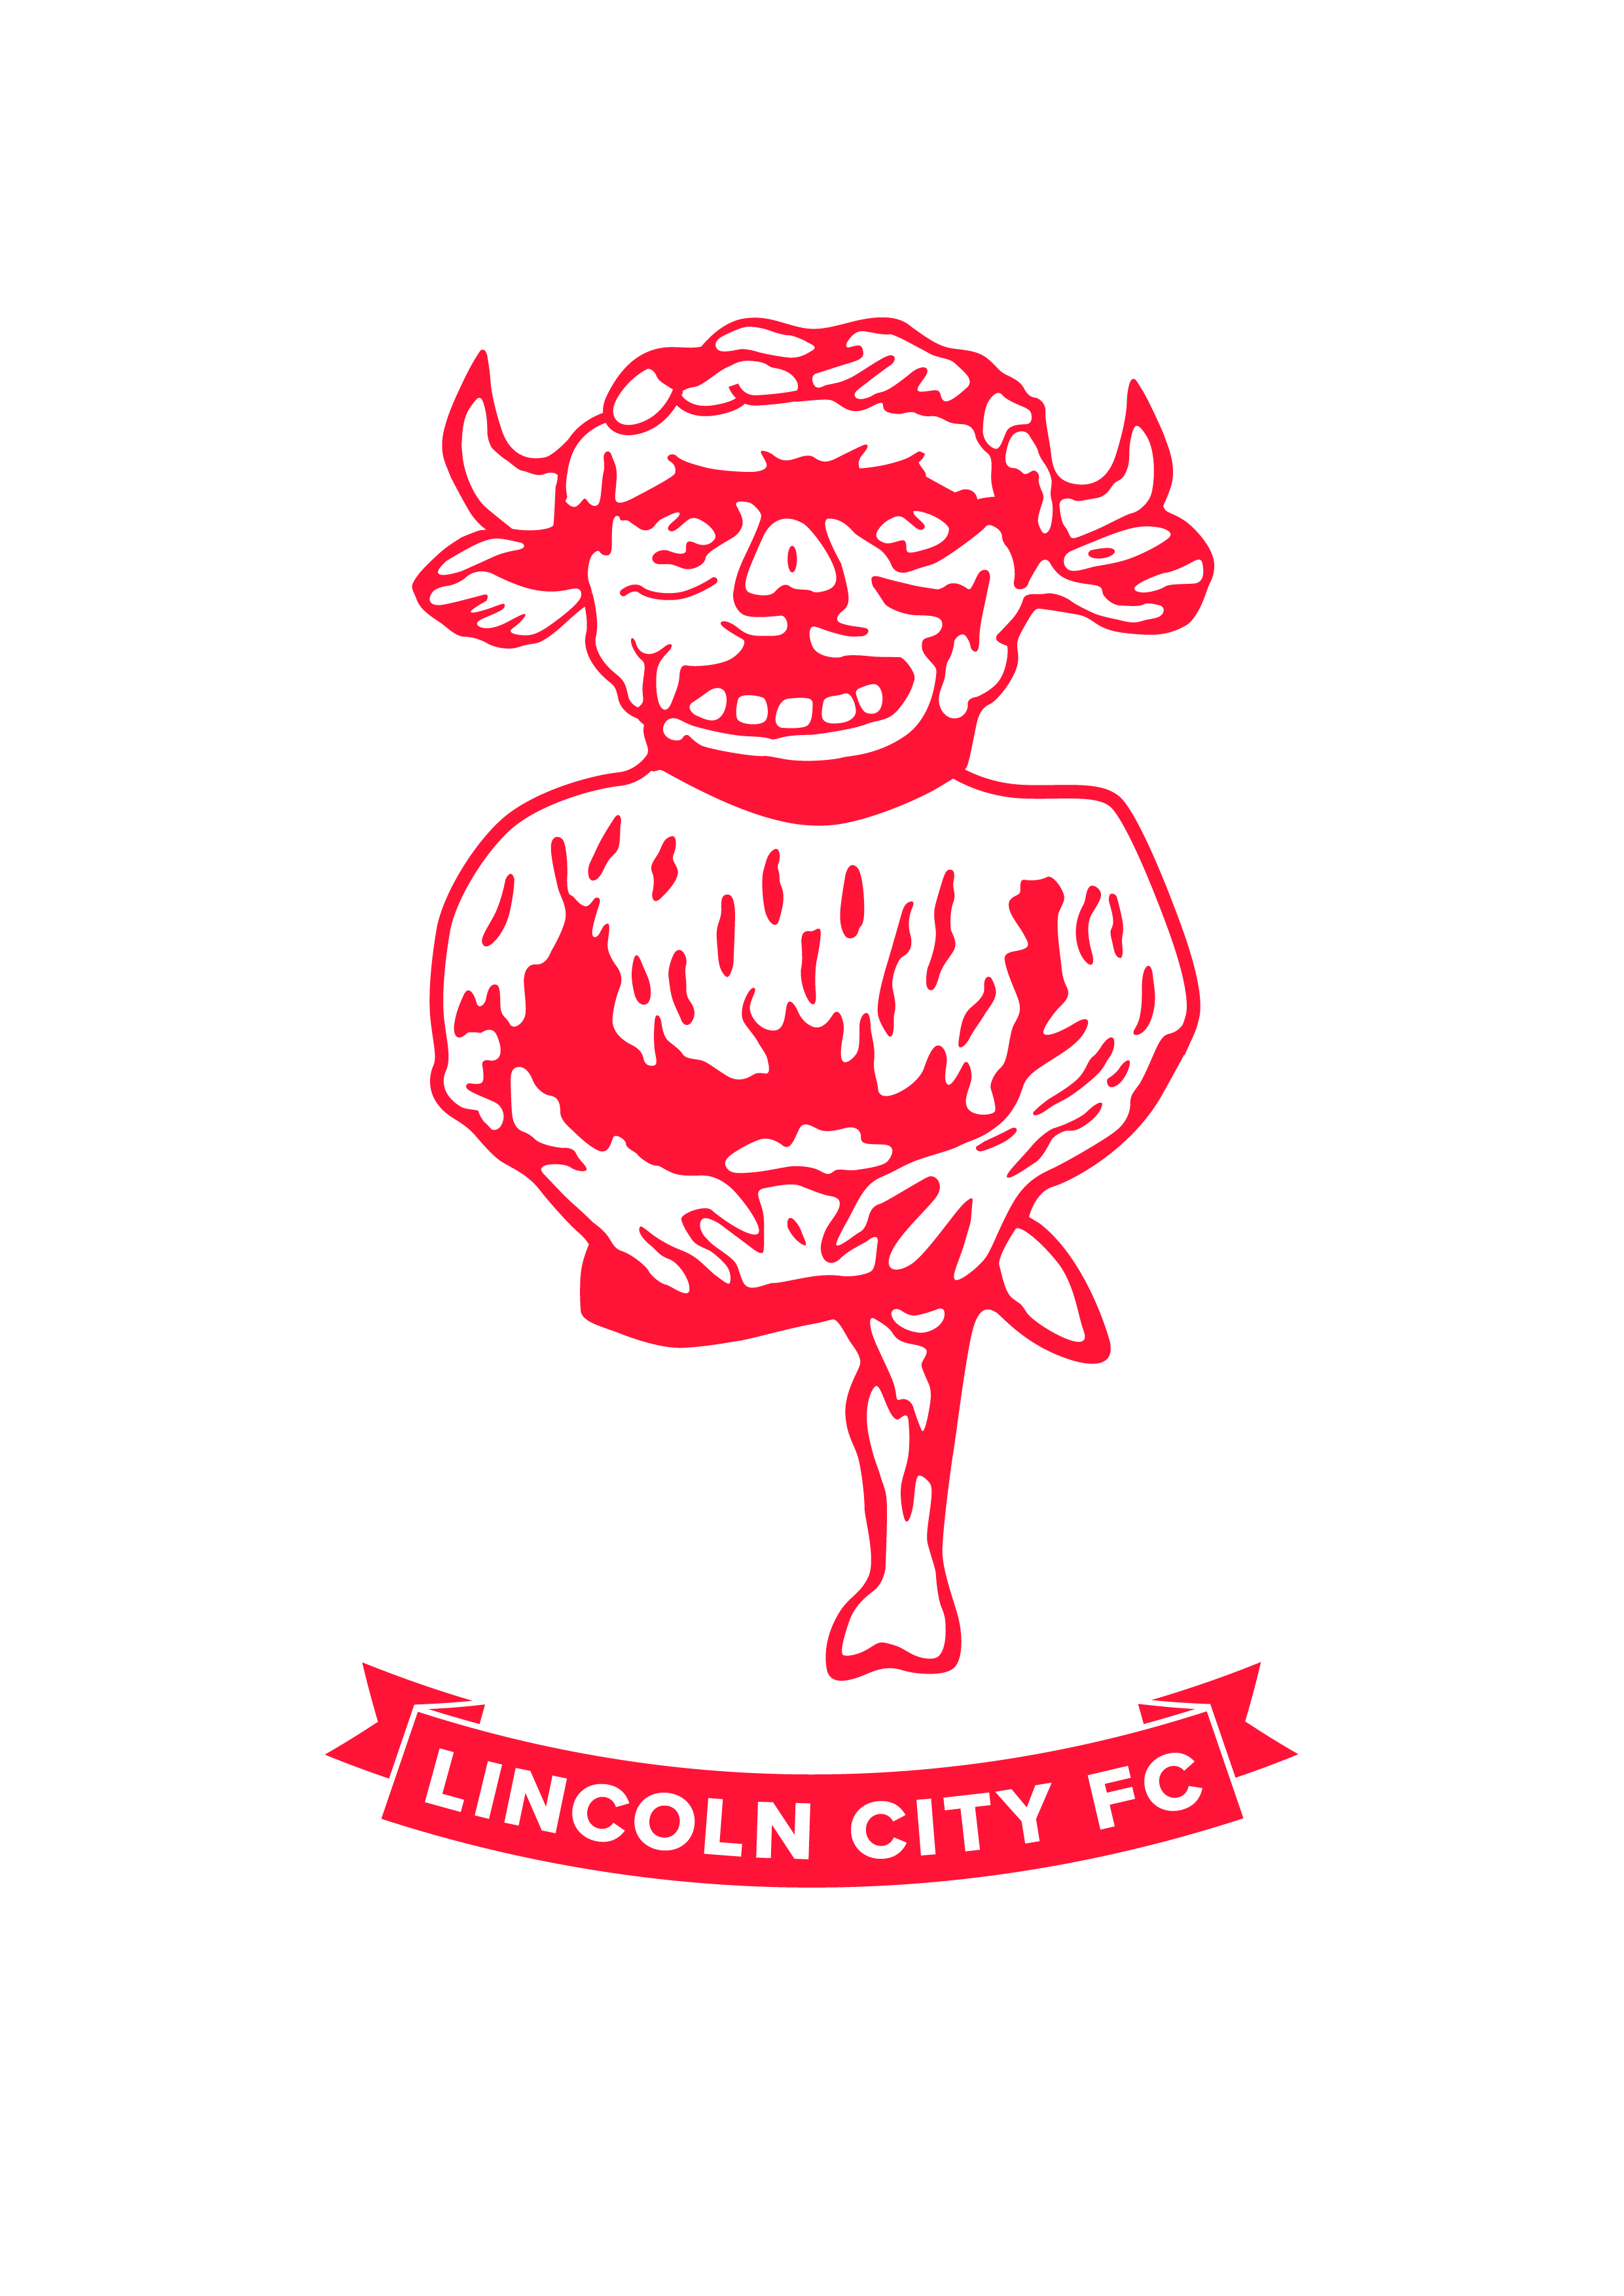 Lincoln City Football Club logo